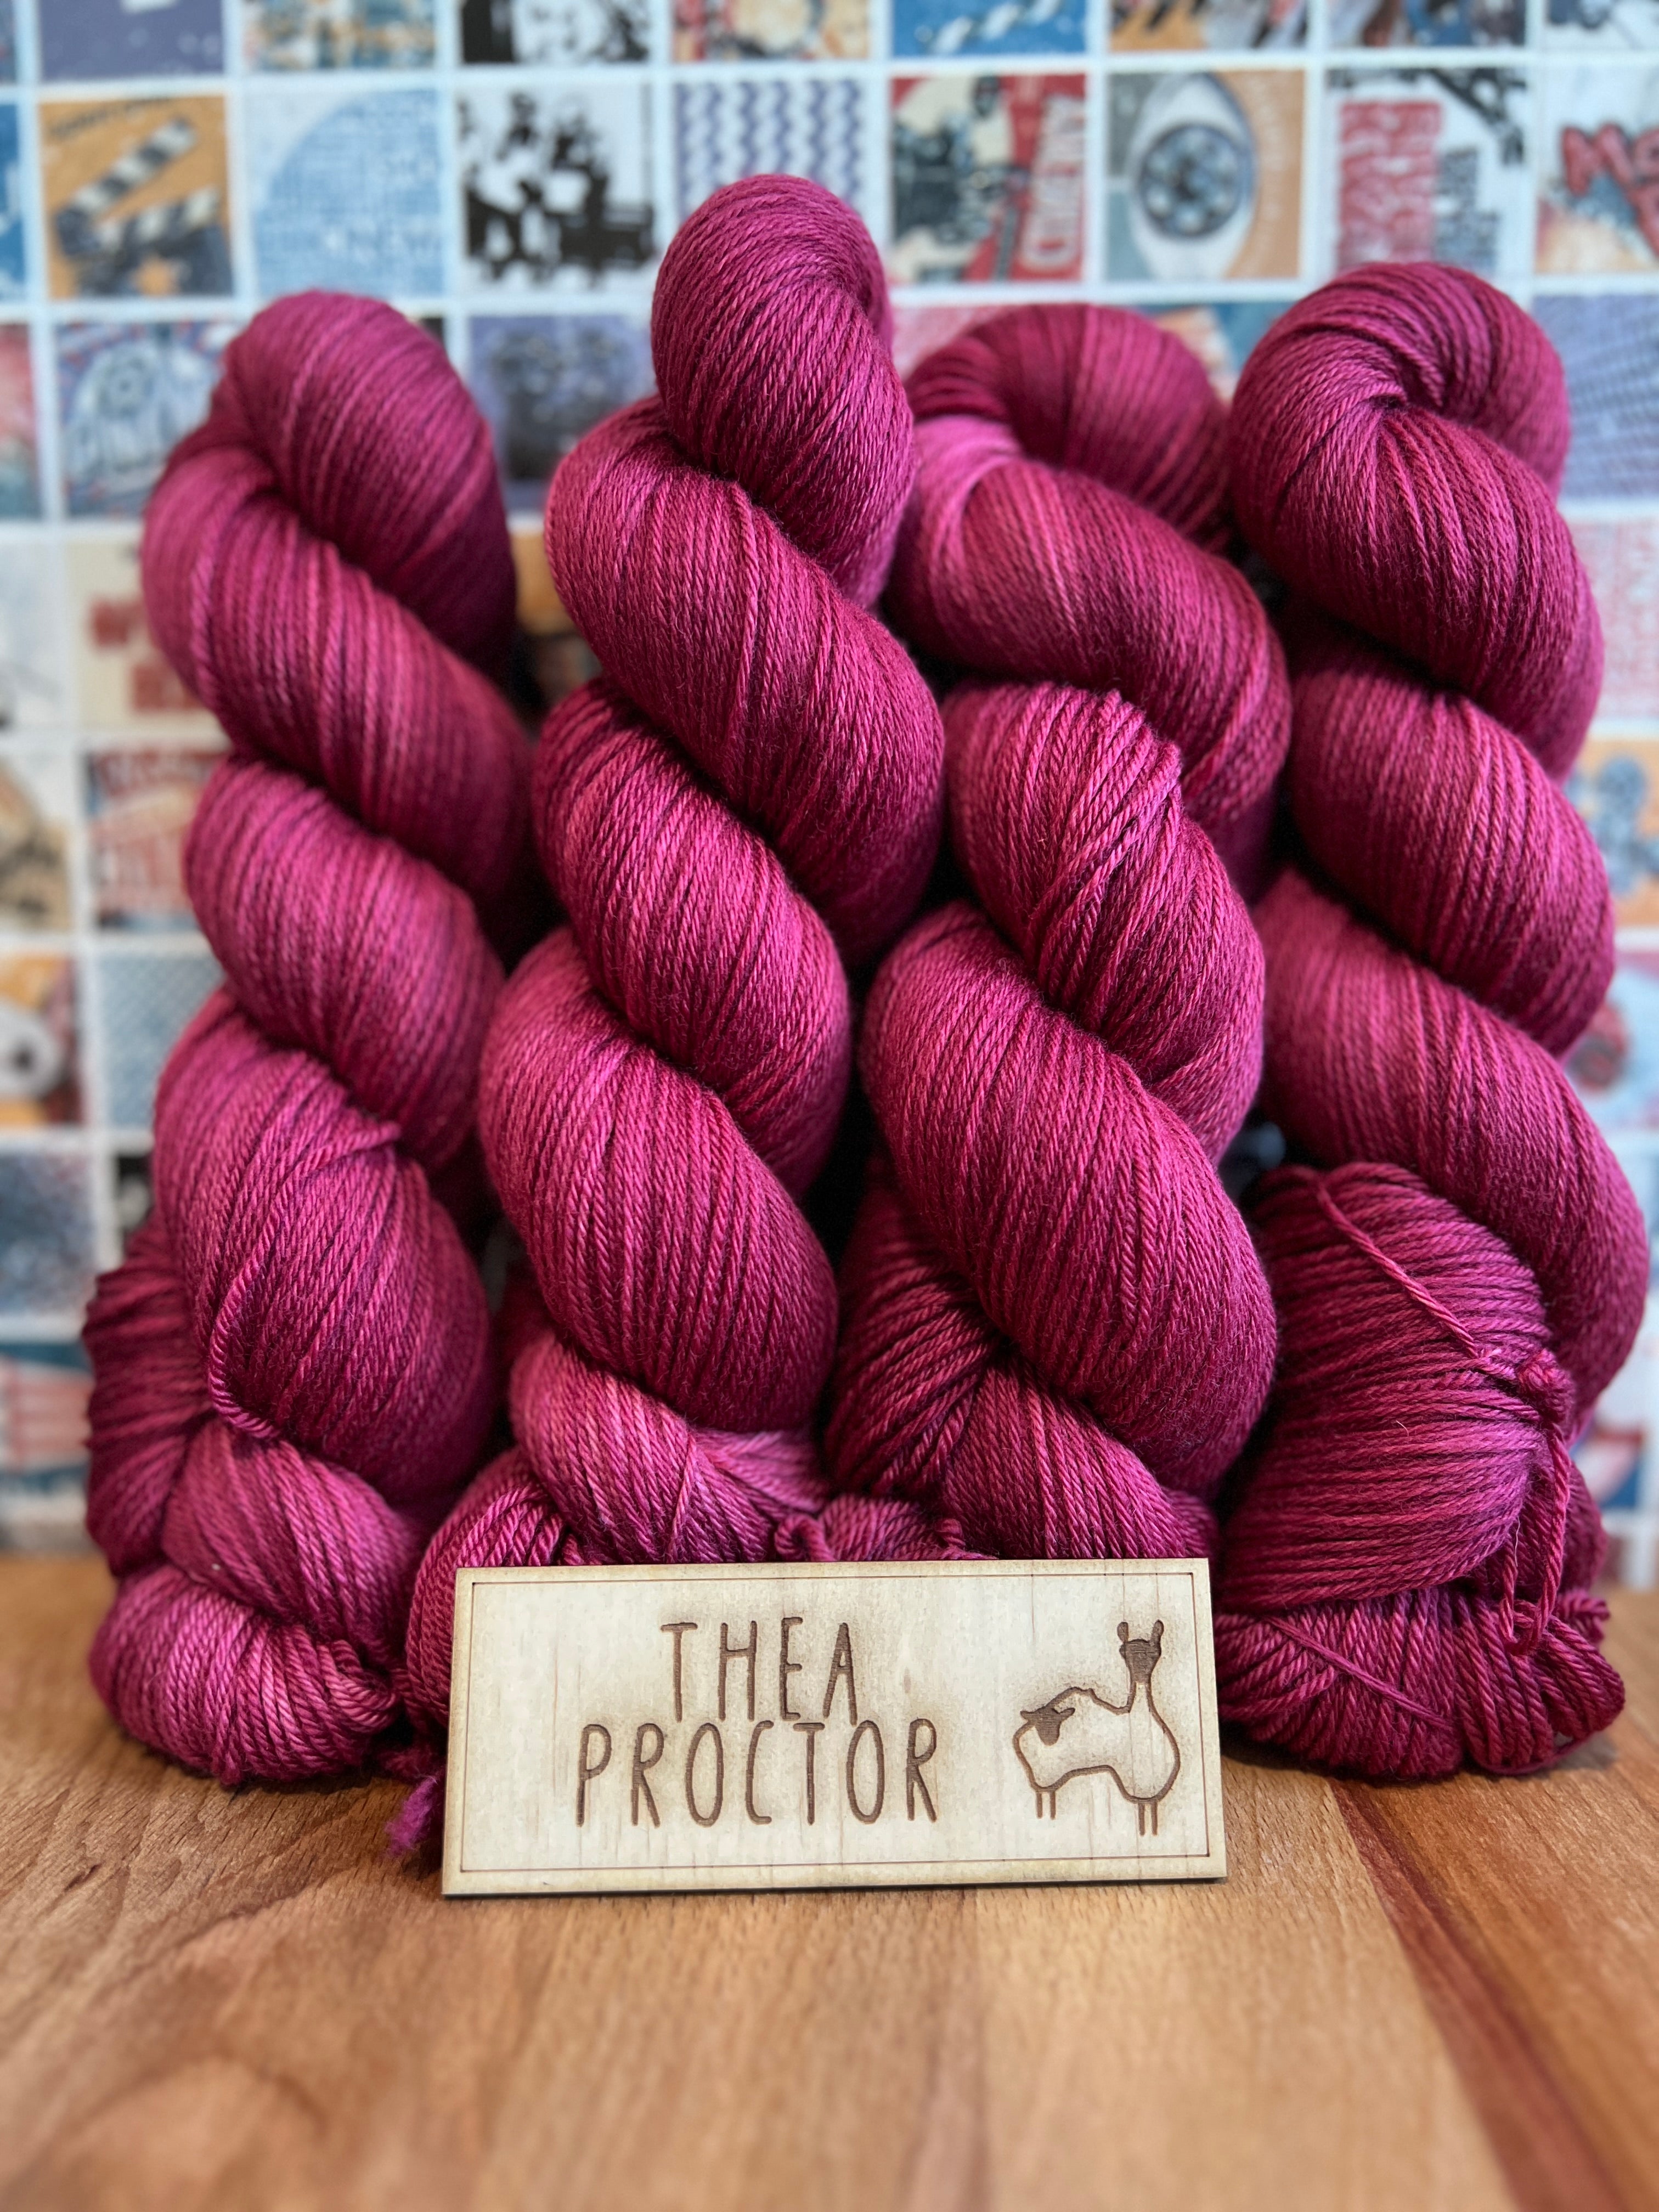 Thea Proctor II